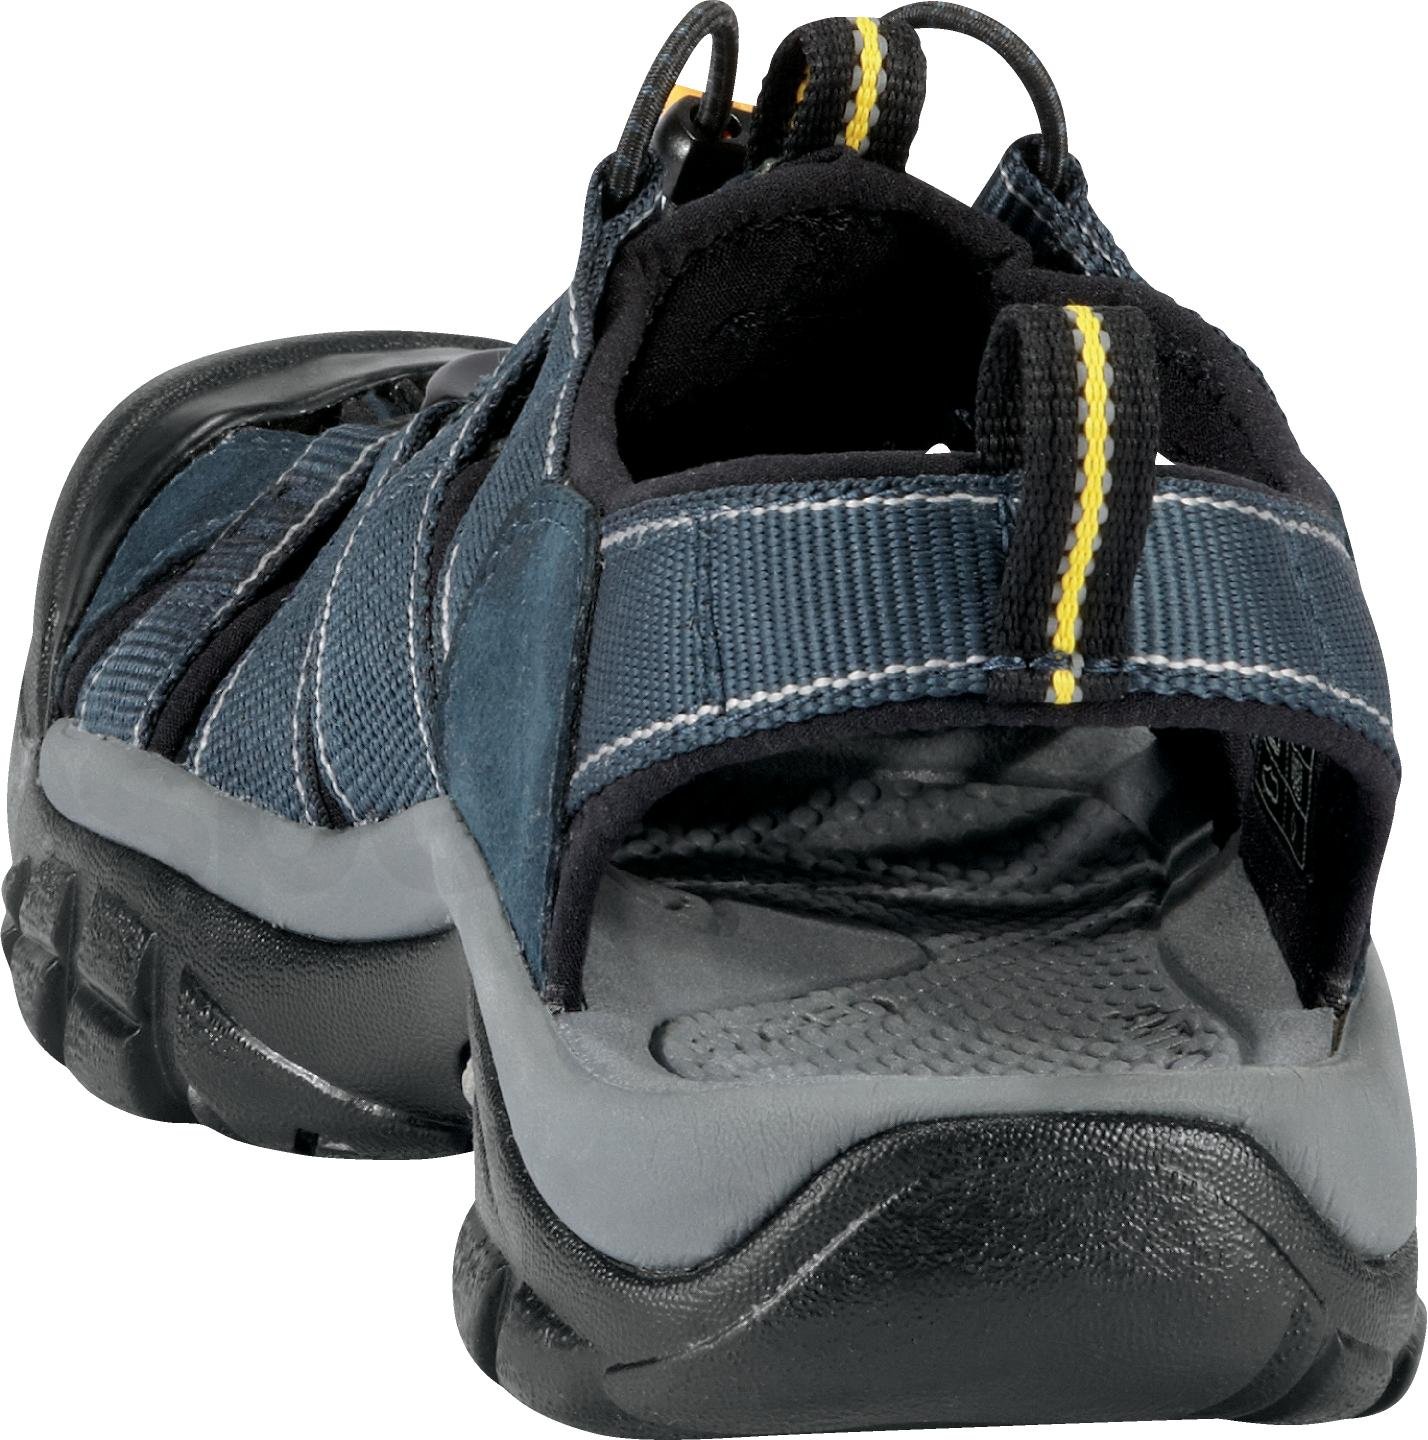 Obuv - sandály Keen Newport H2 M - modrá/černá